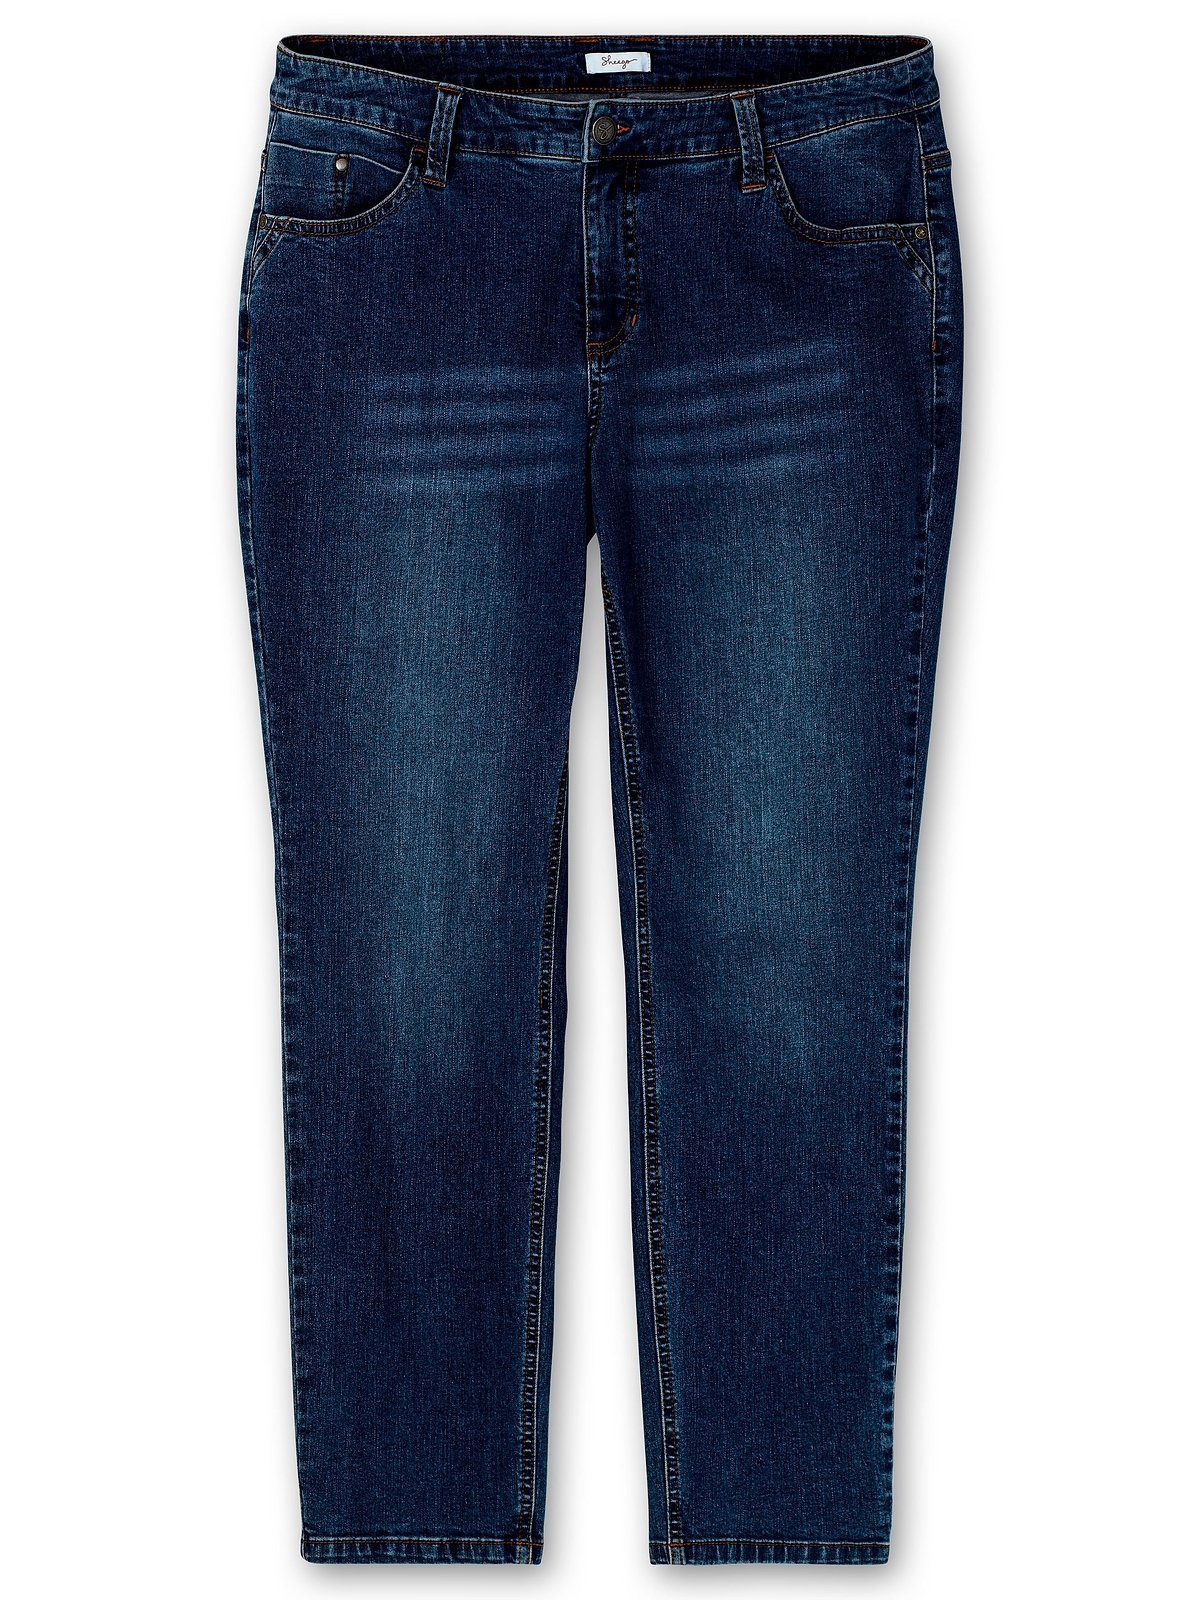 Sheego Stretch-Jeans Große Größen dark Denim blue Five-Pocket-Stil im